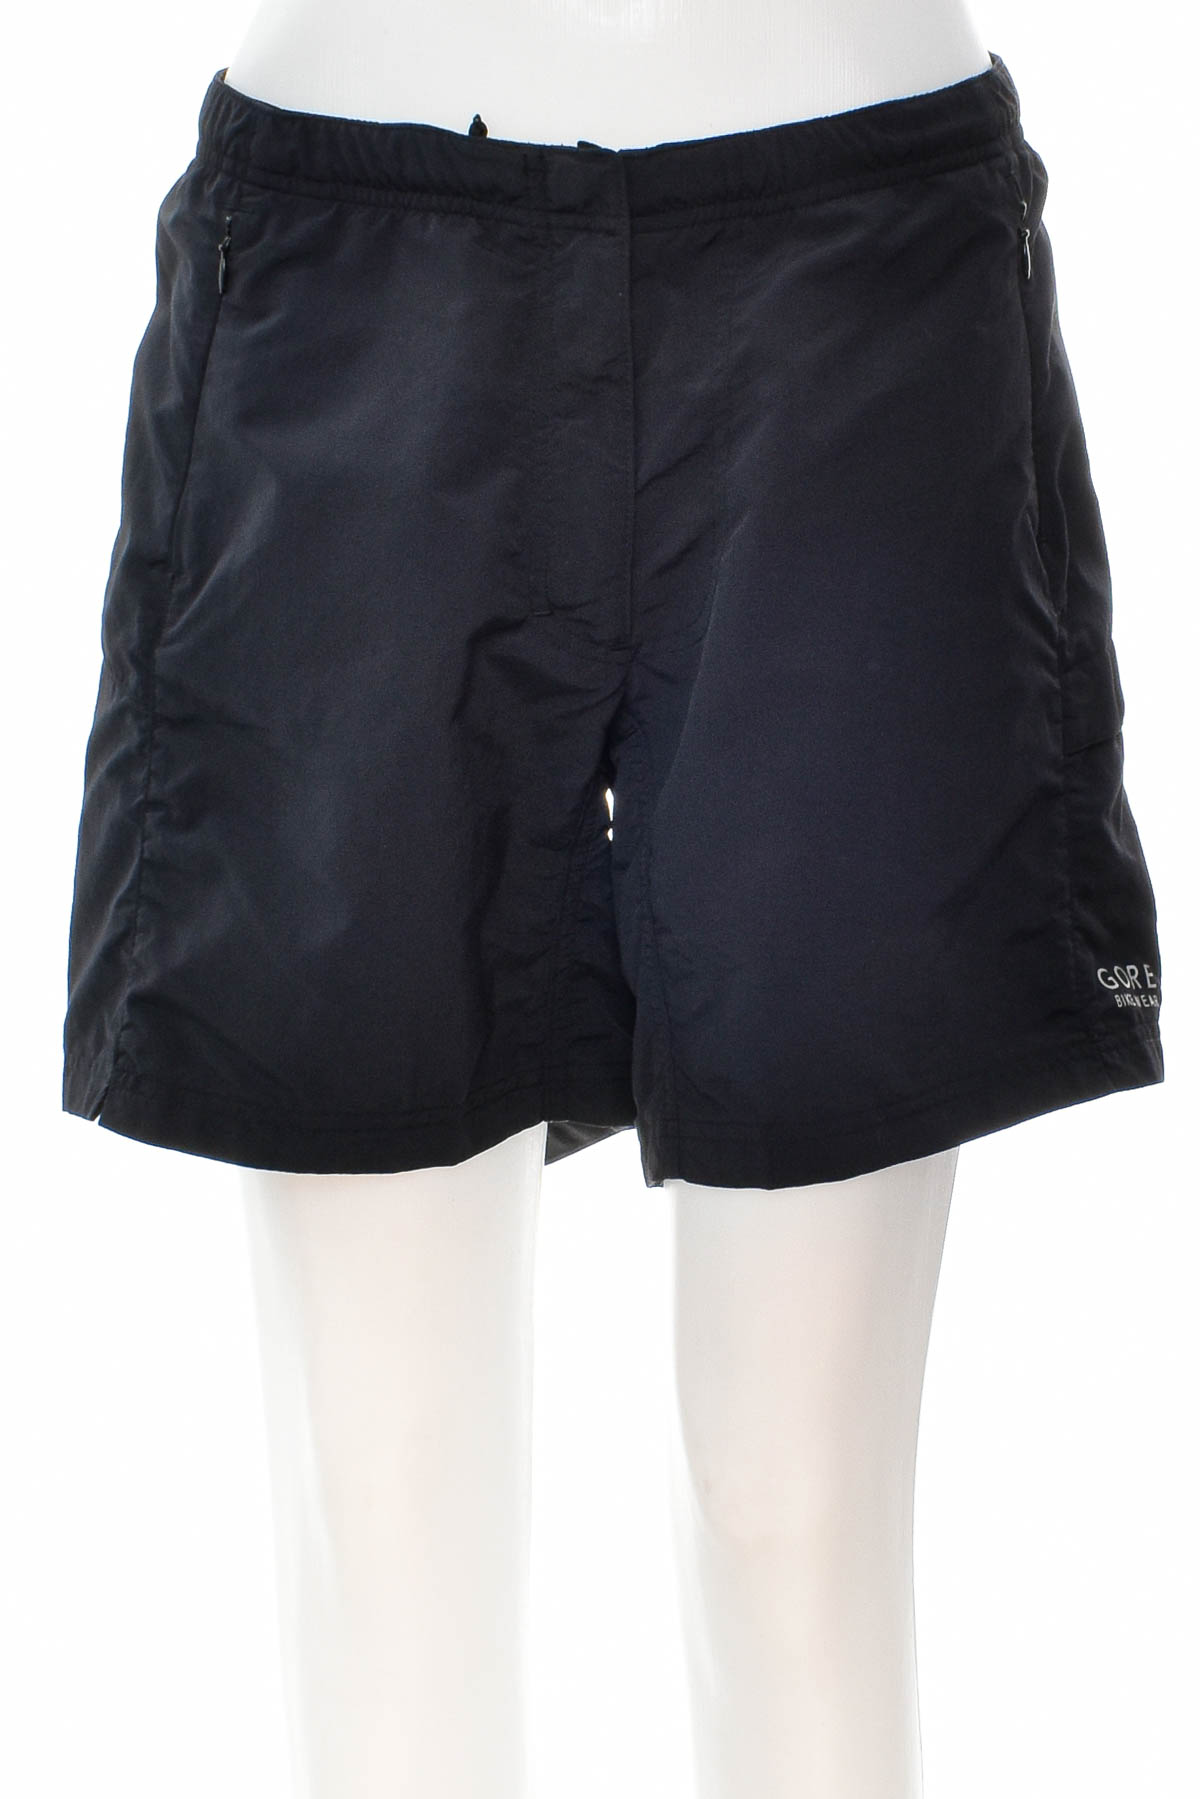 Female shorts - GORE BIKE WEAR - 0